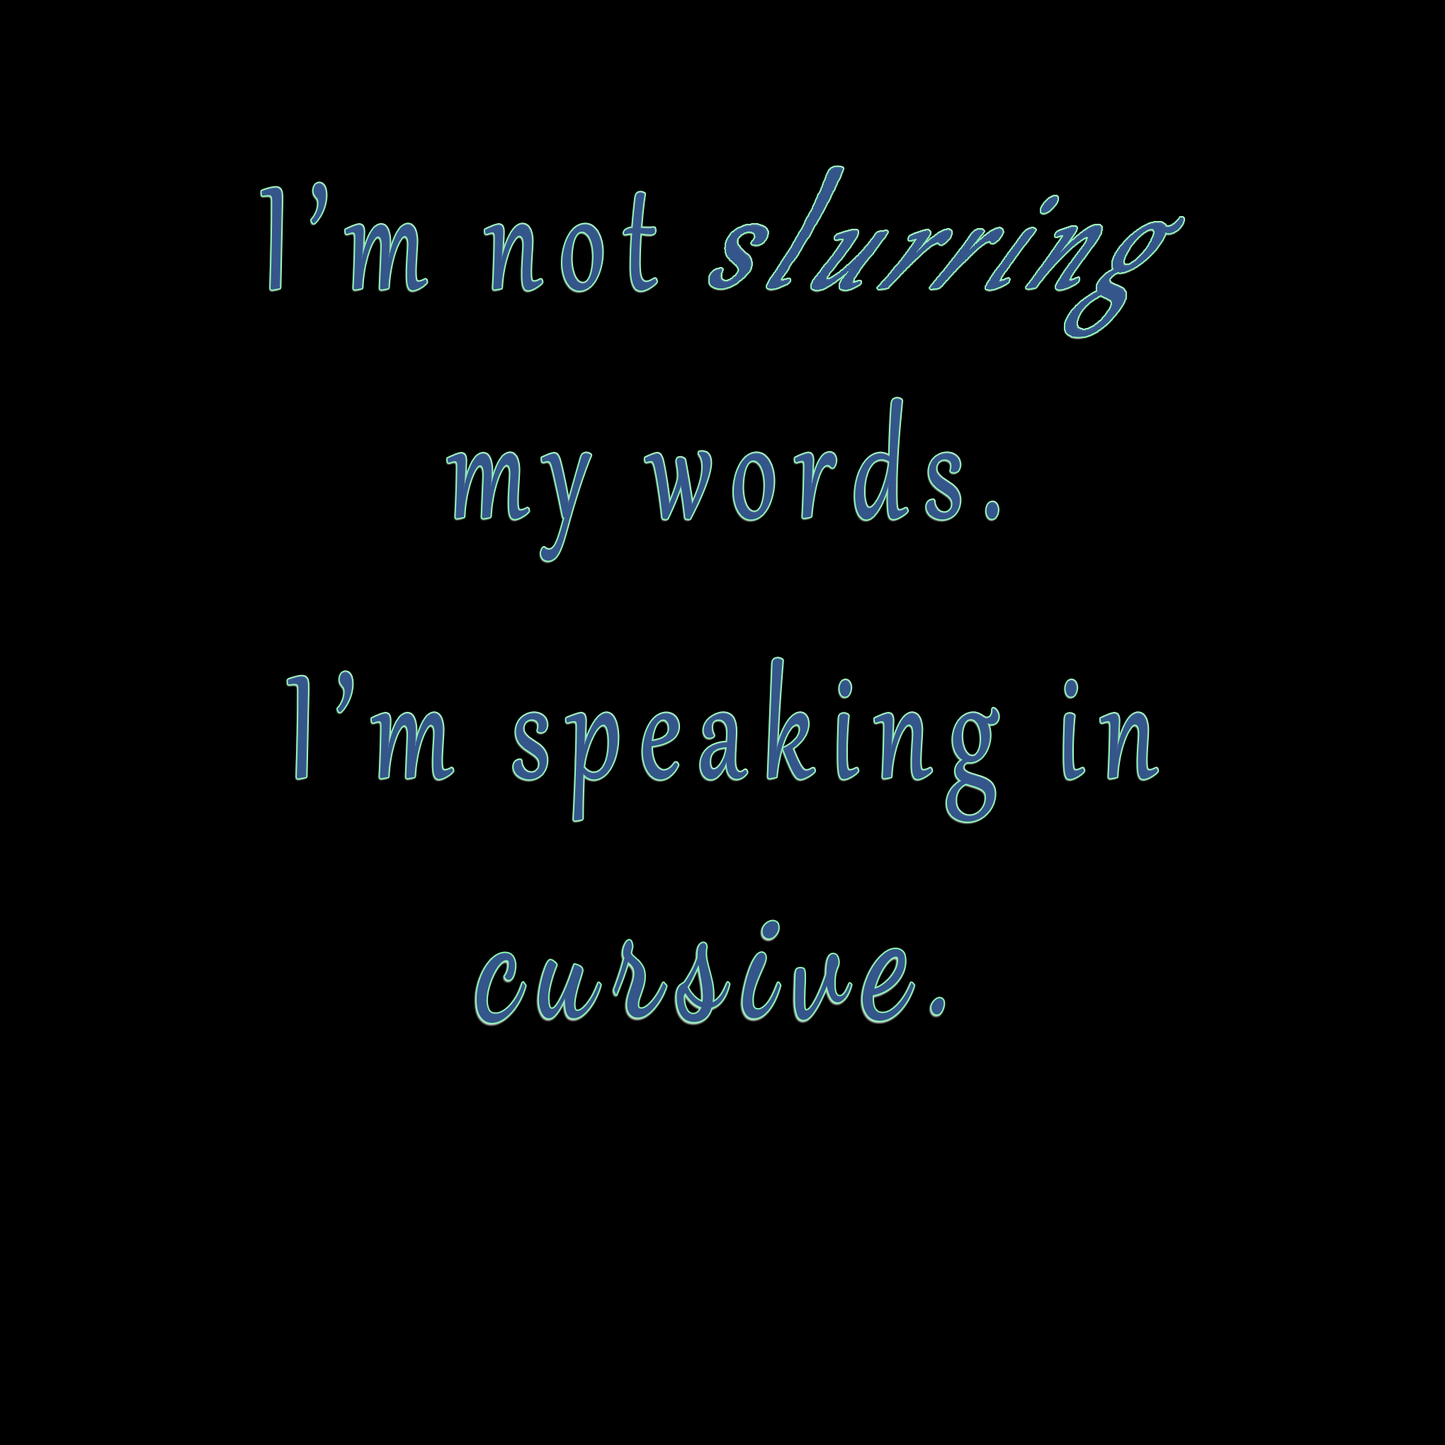 "I'm not slurring my words. I'm speaking in cursive."